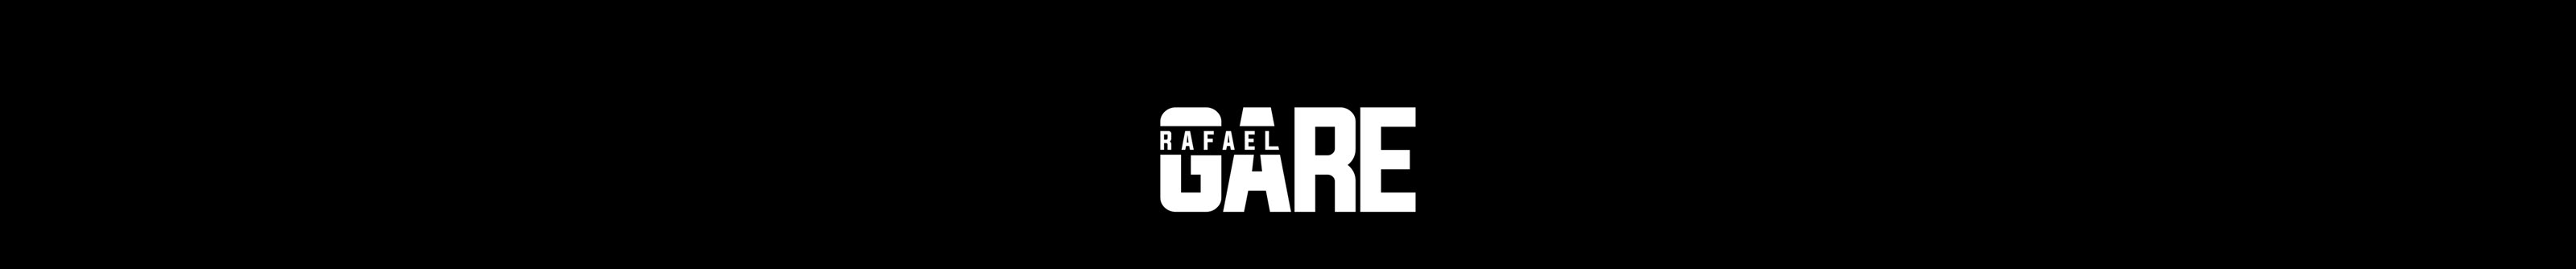 Rafael Garé's profile banner